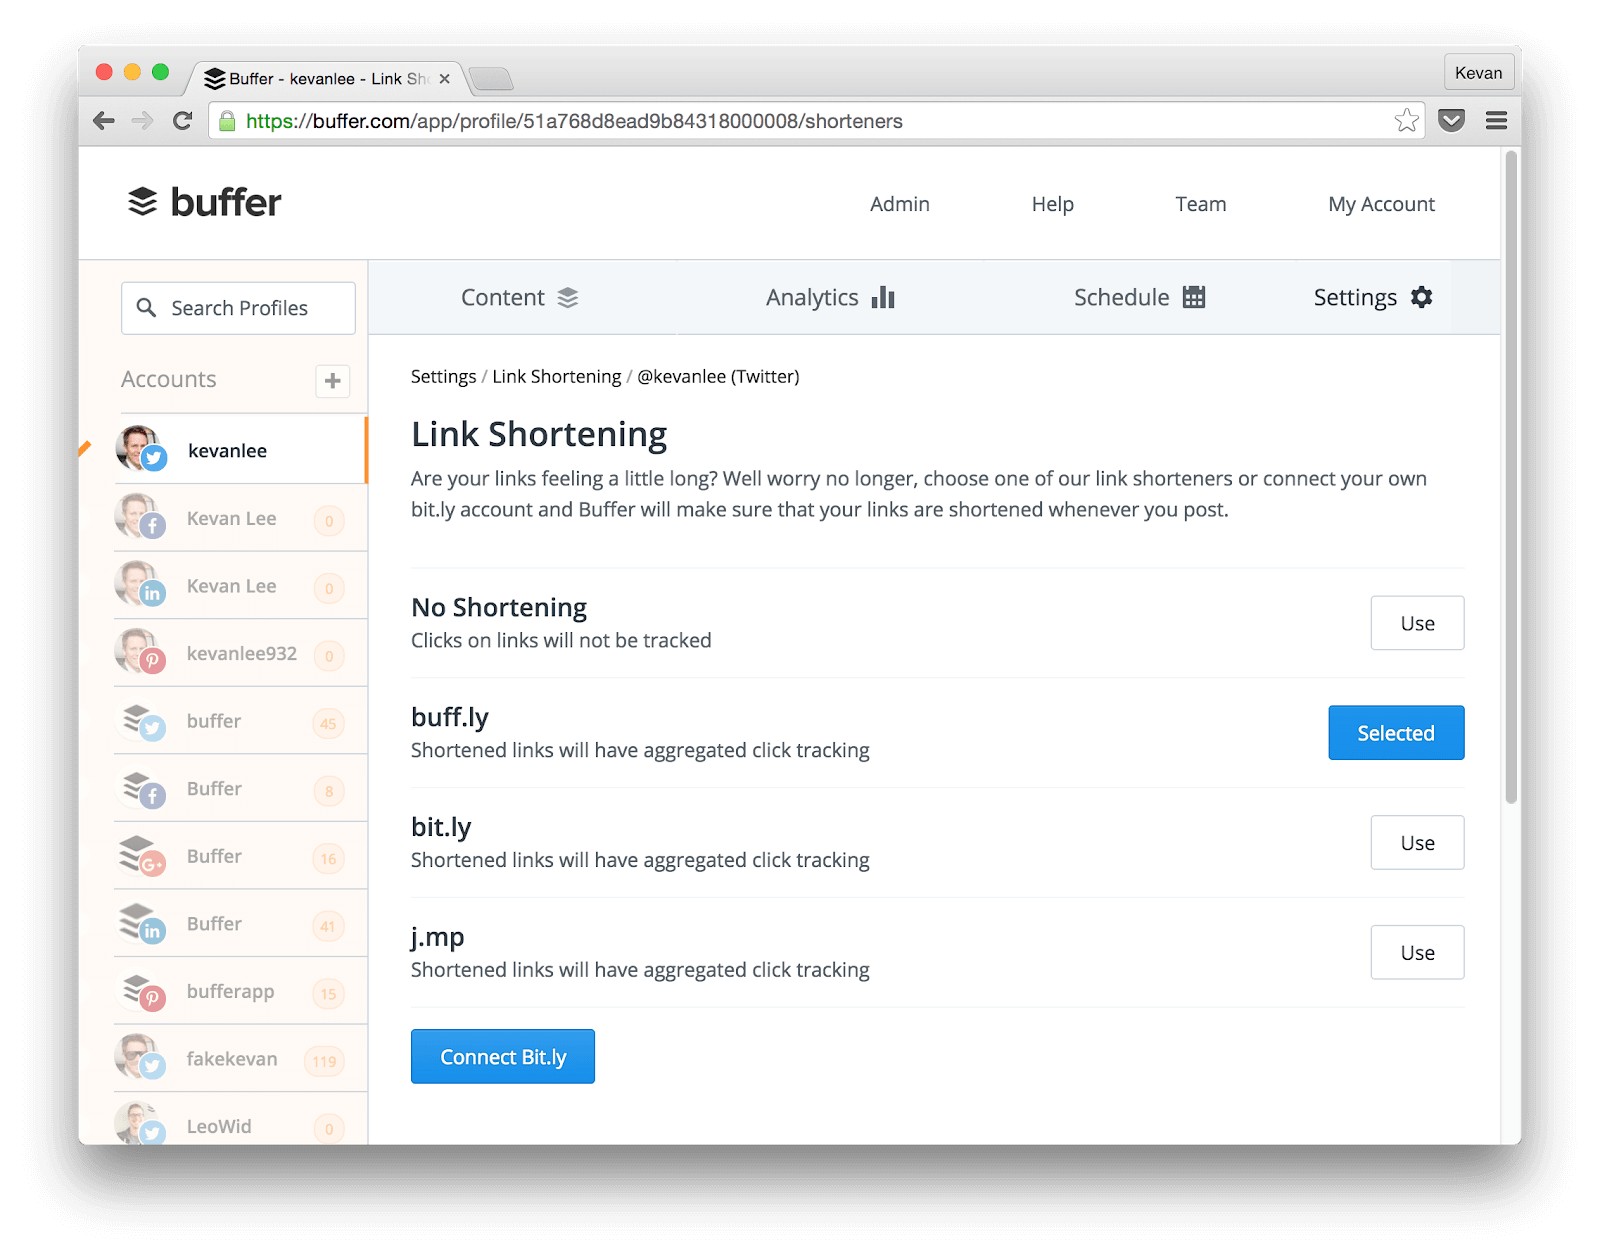 Buffer's link shortening page